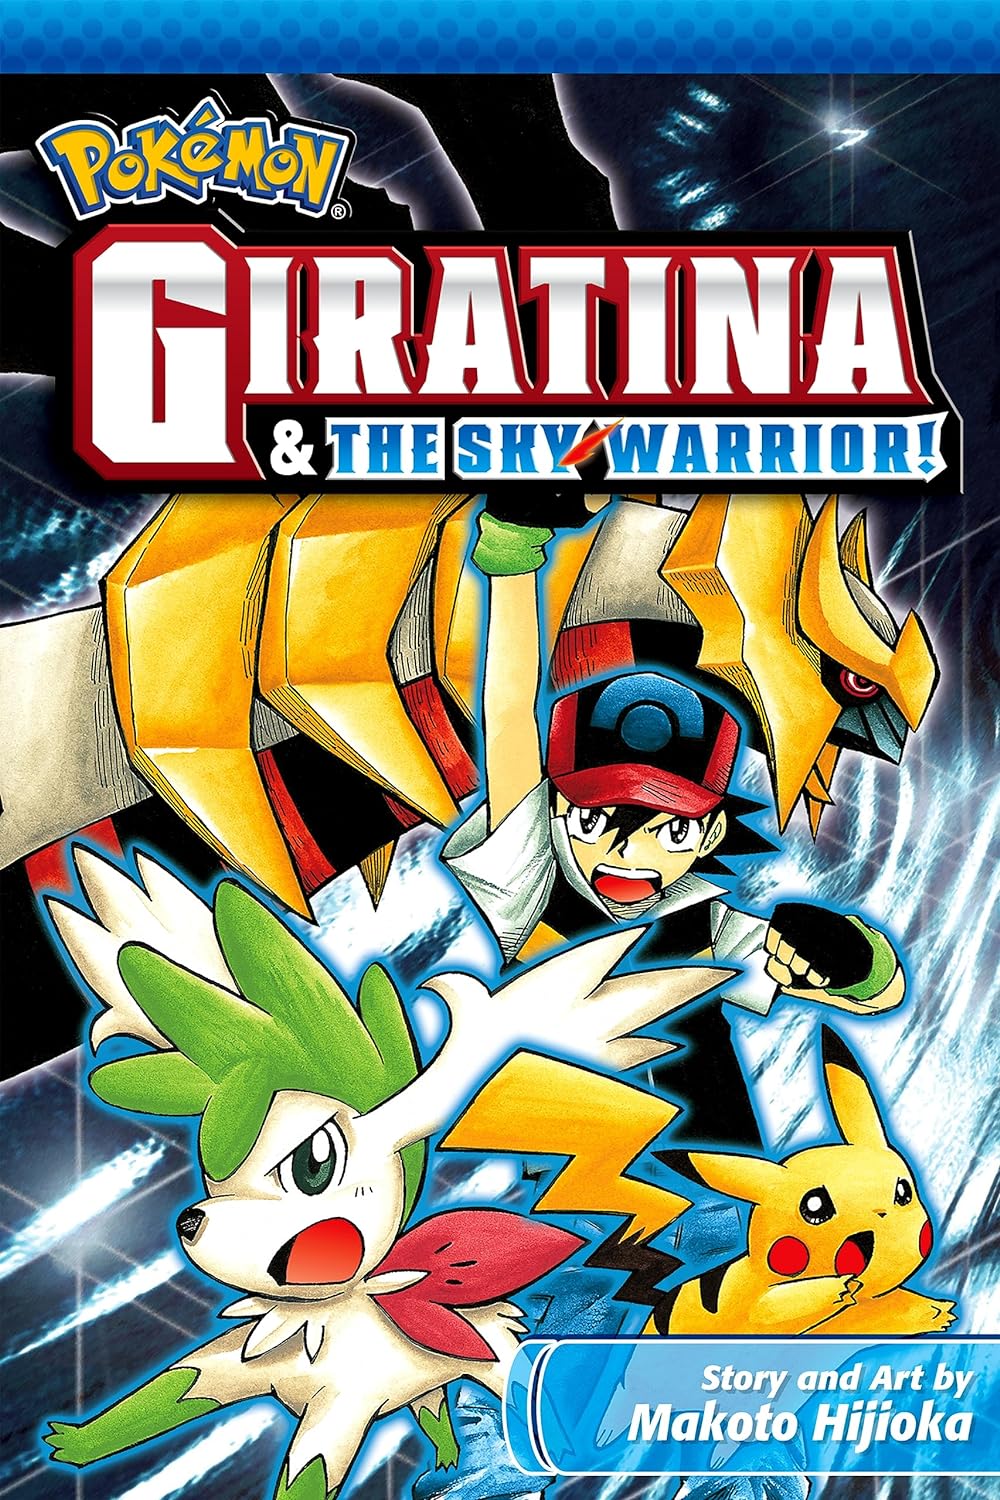 Cover image of the Manga Pokémon-Giratina-&-the-Sky-Warrior!